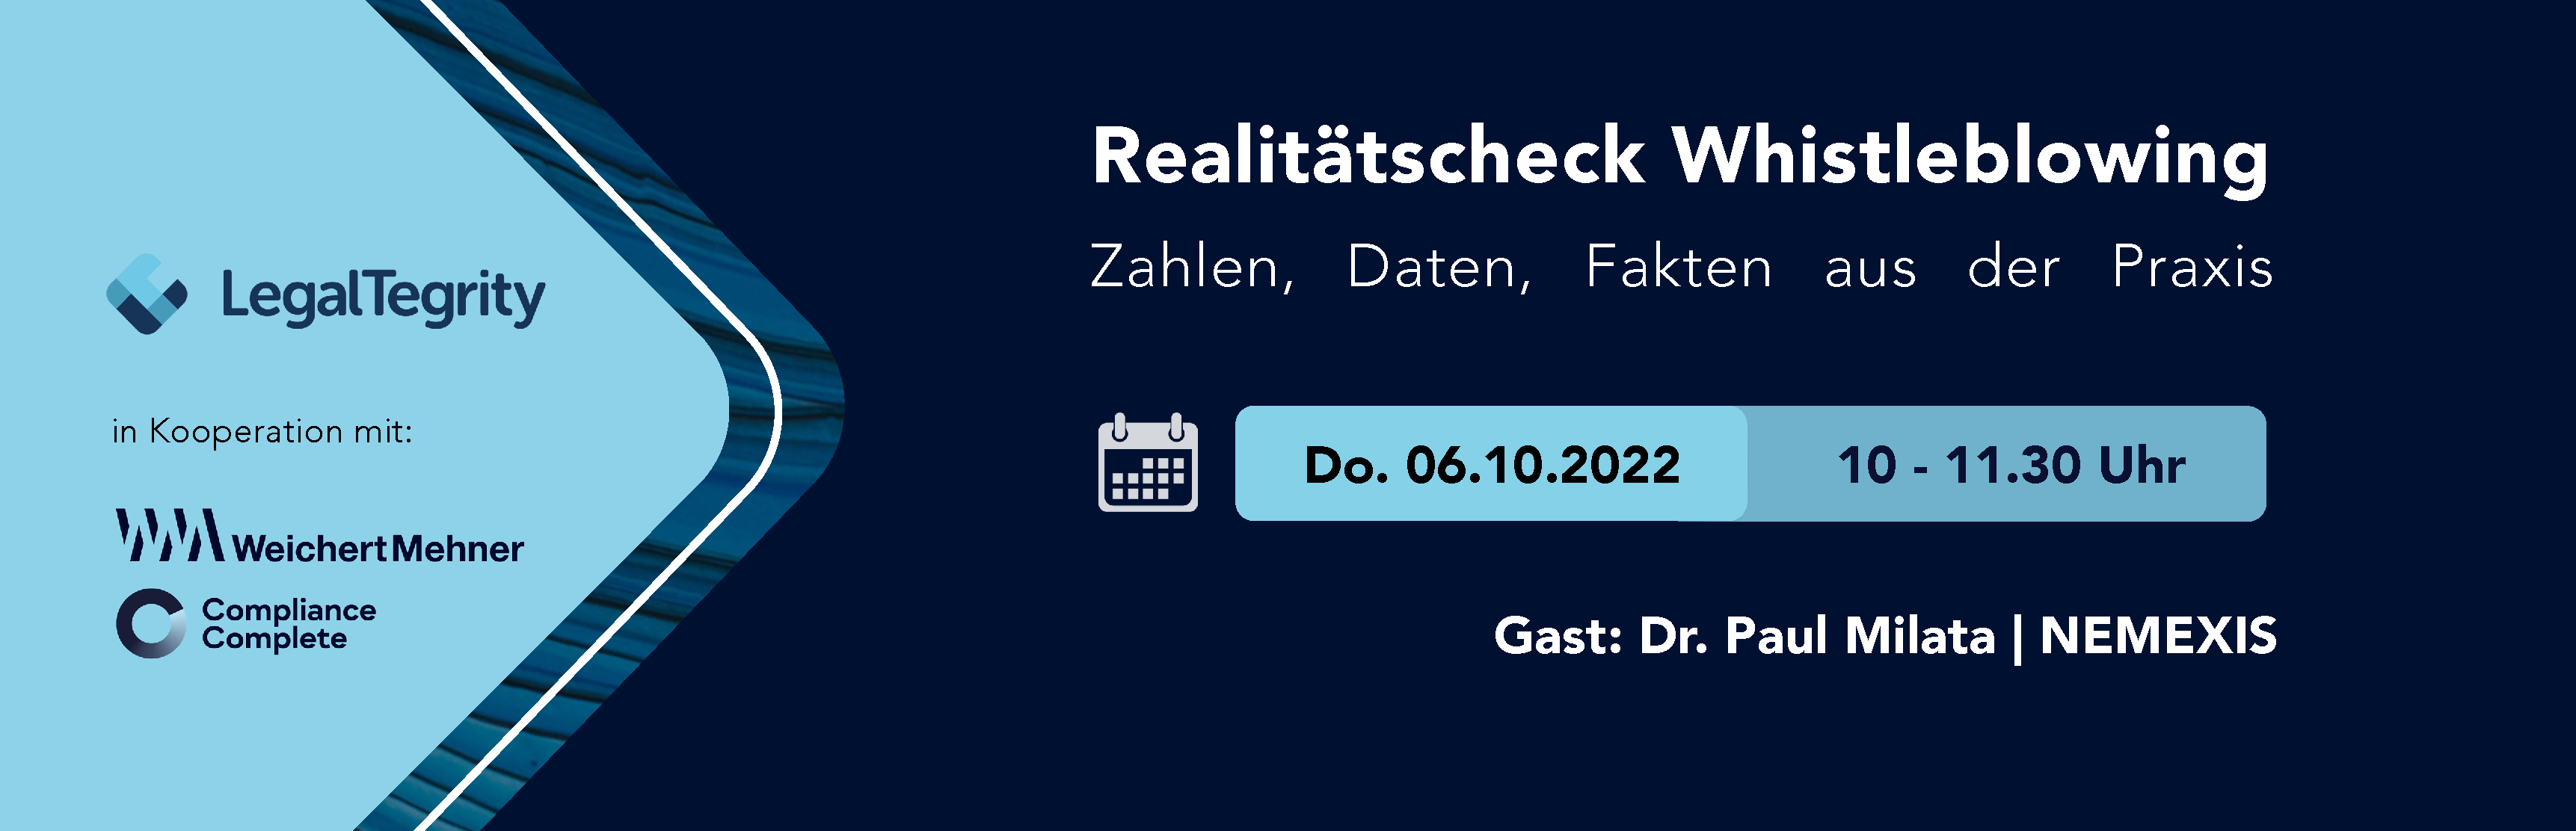 LegalTegrity Webinar Realitätscheck Whistleblowing 06.10.2022